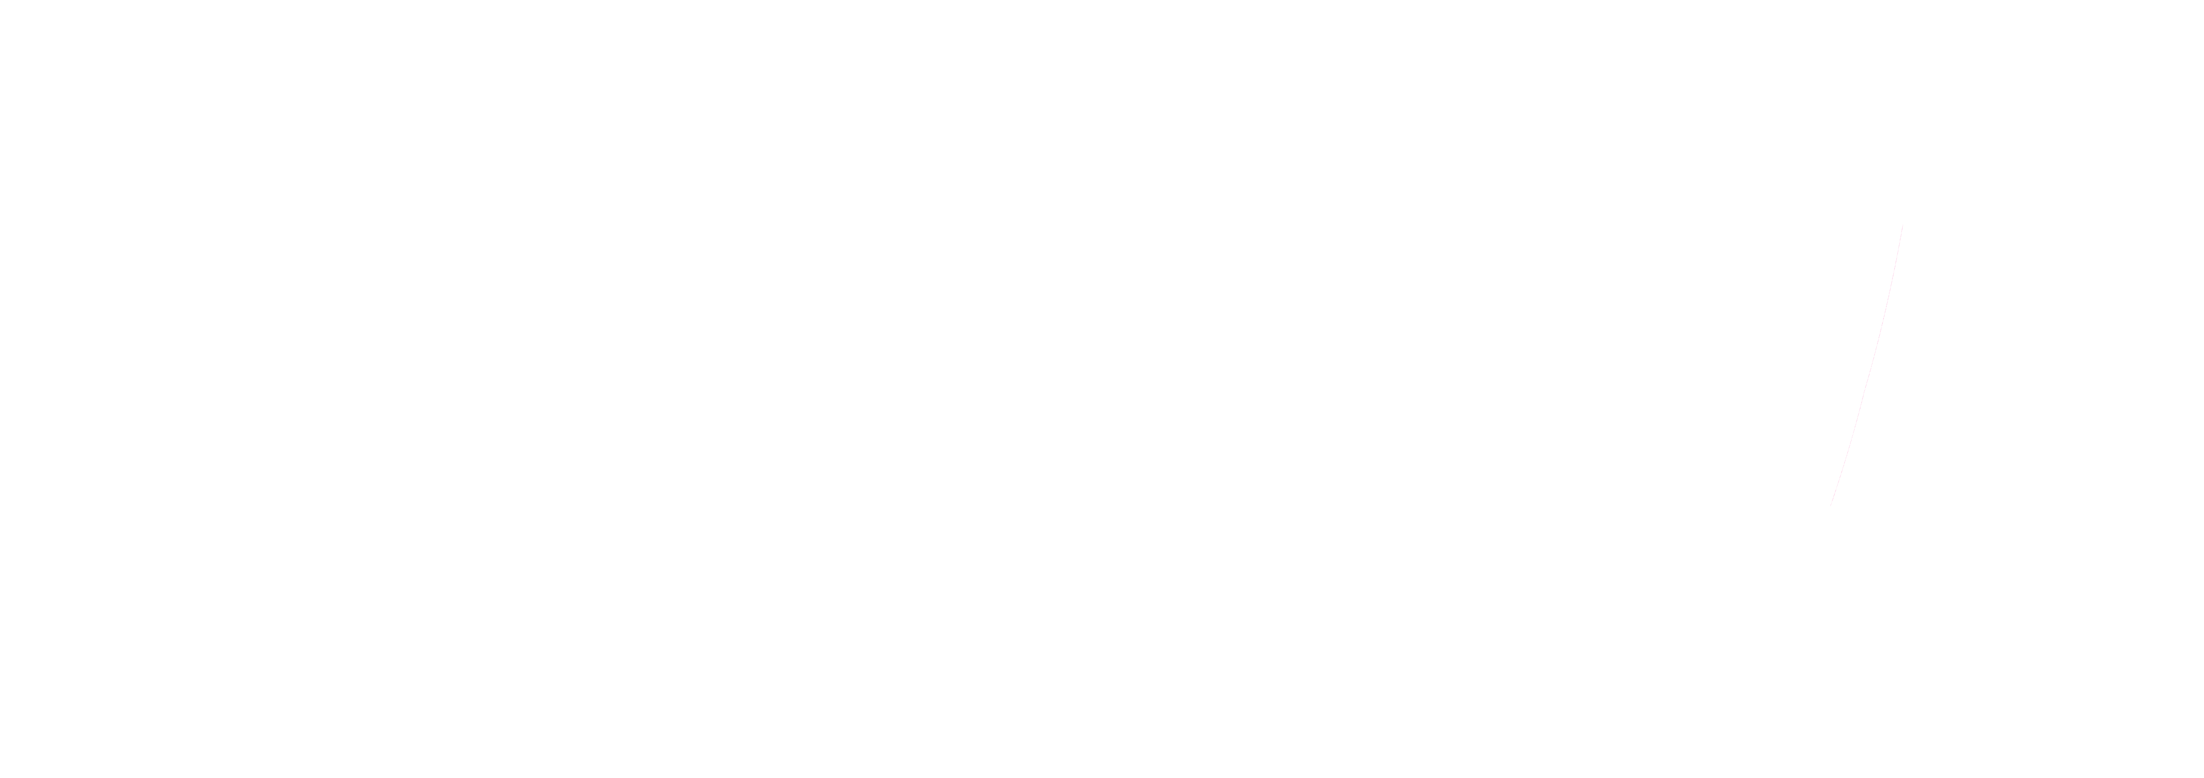 Logos for Security Dynamics and Moxie Media, Inc.